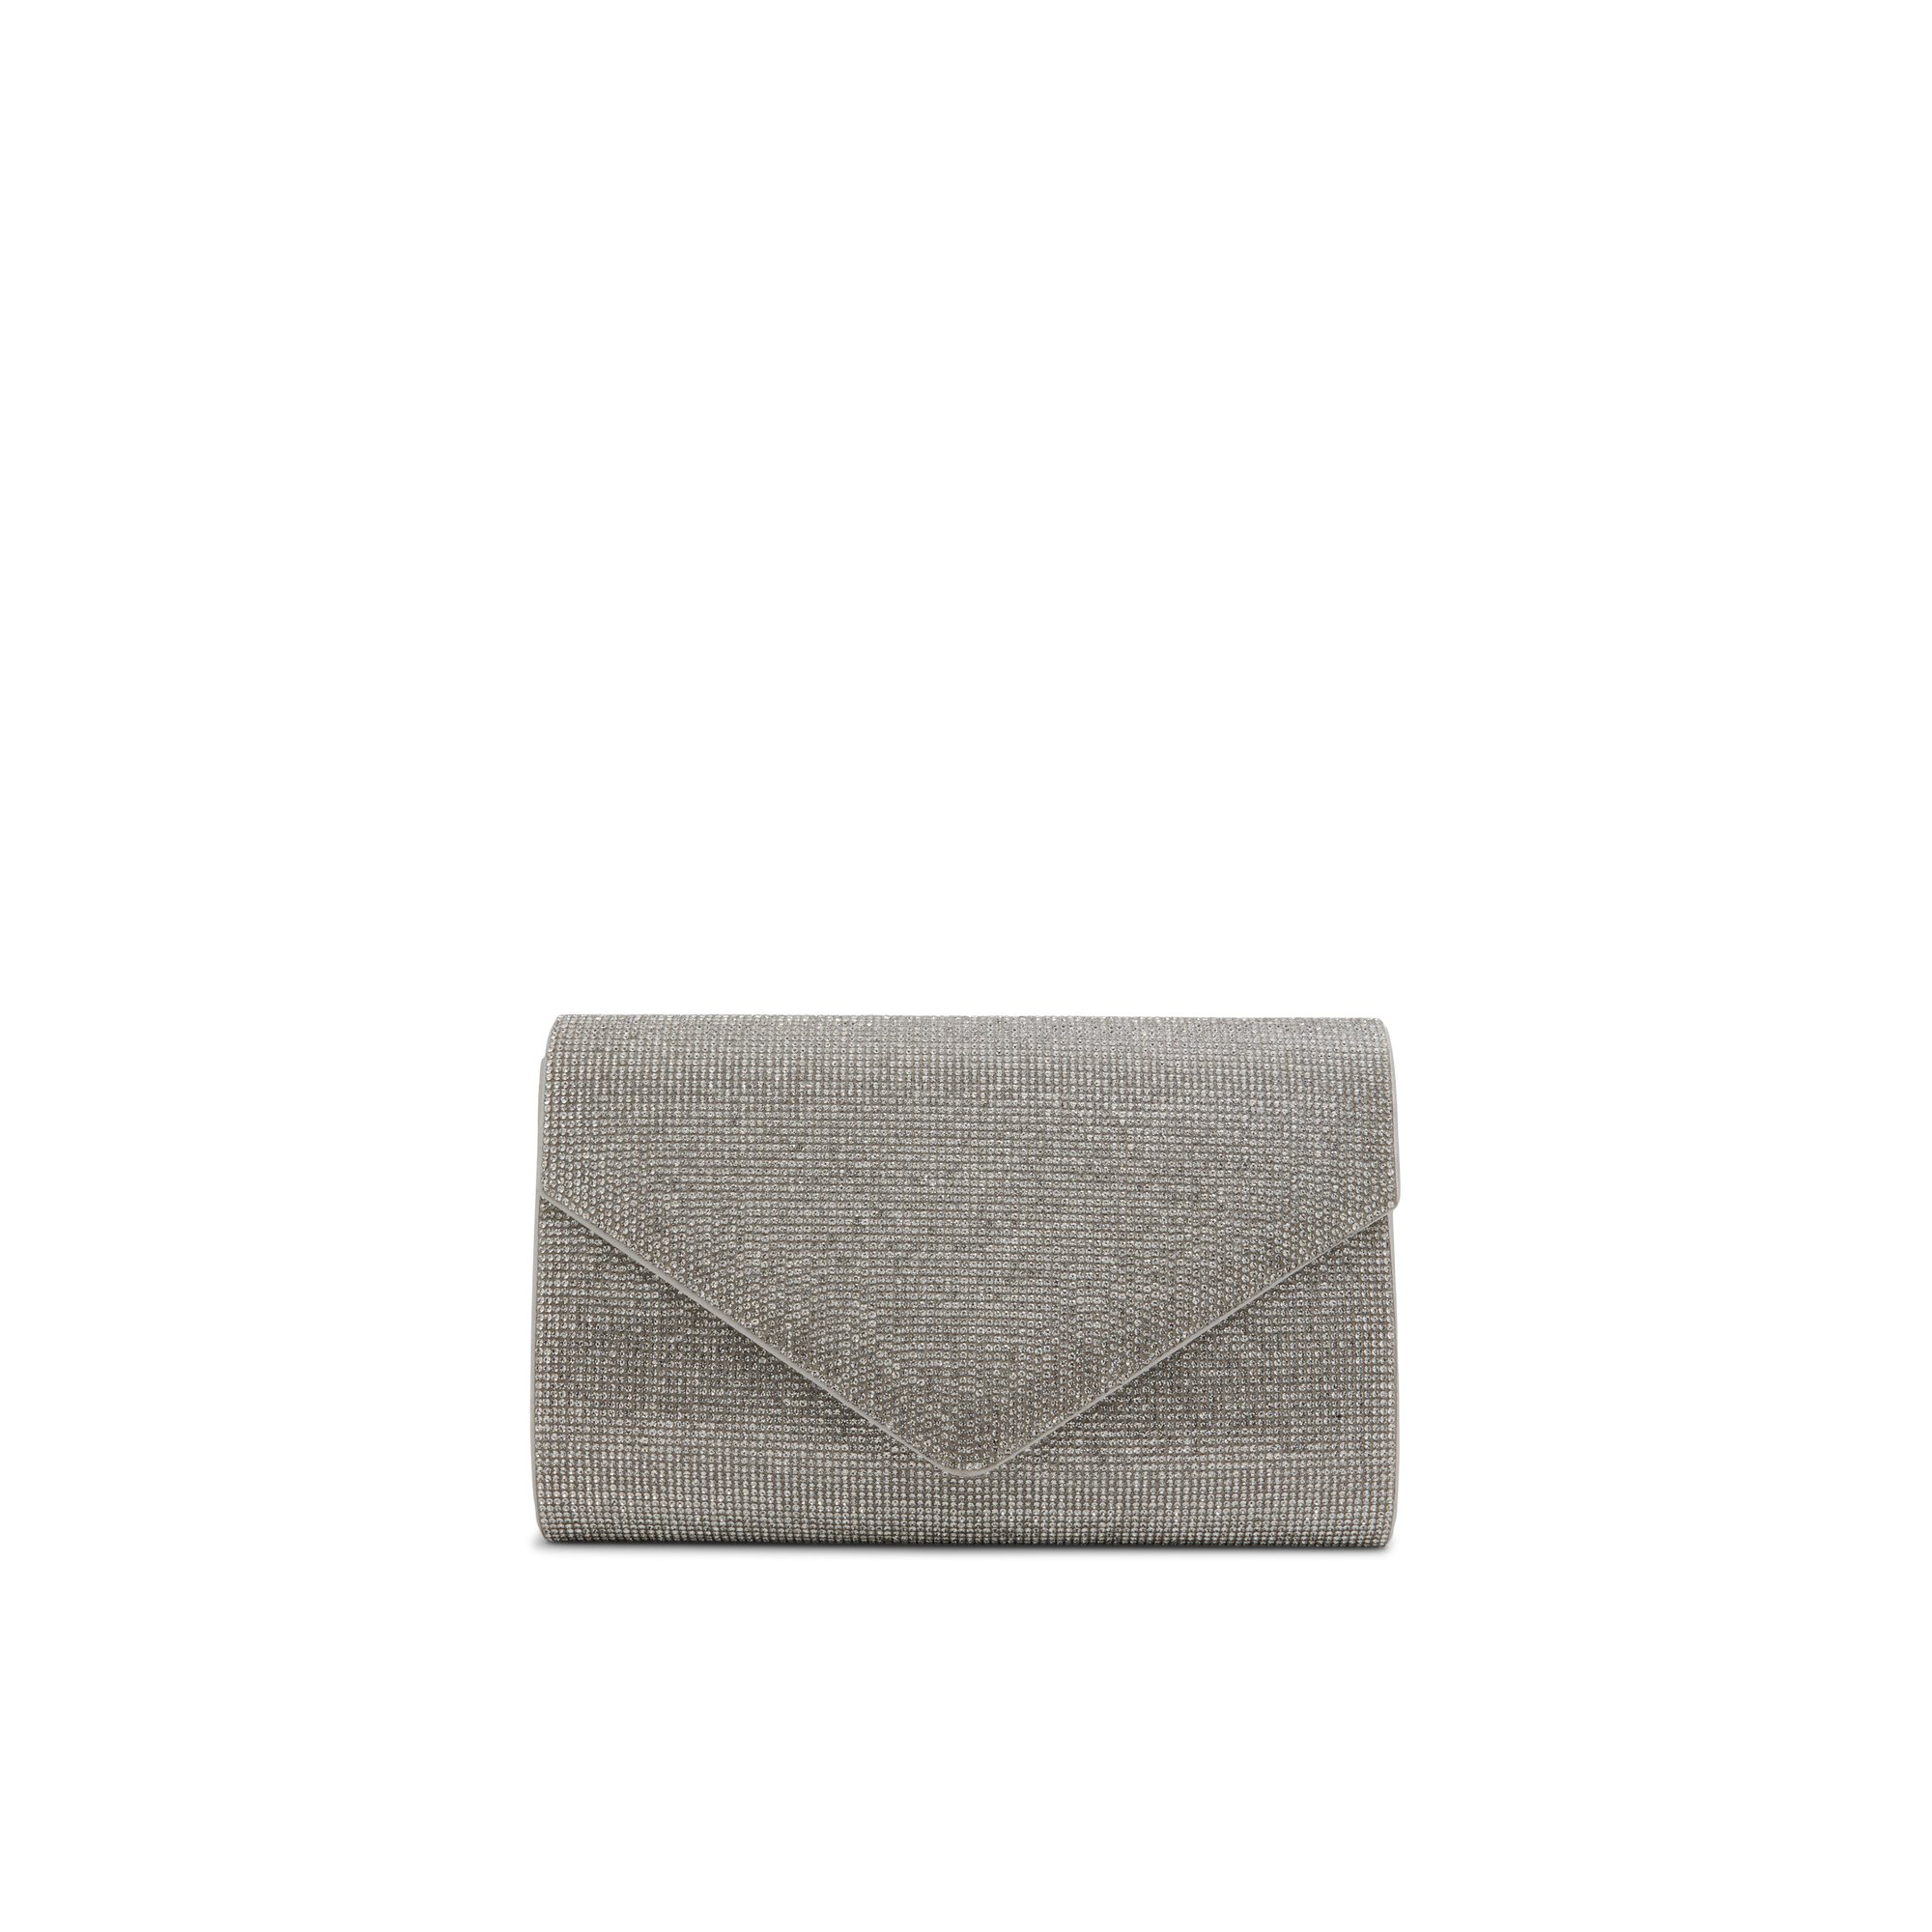 ALDO Geaven - Women's Clutches & Evening Bag Handbag - Silver